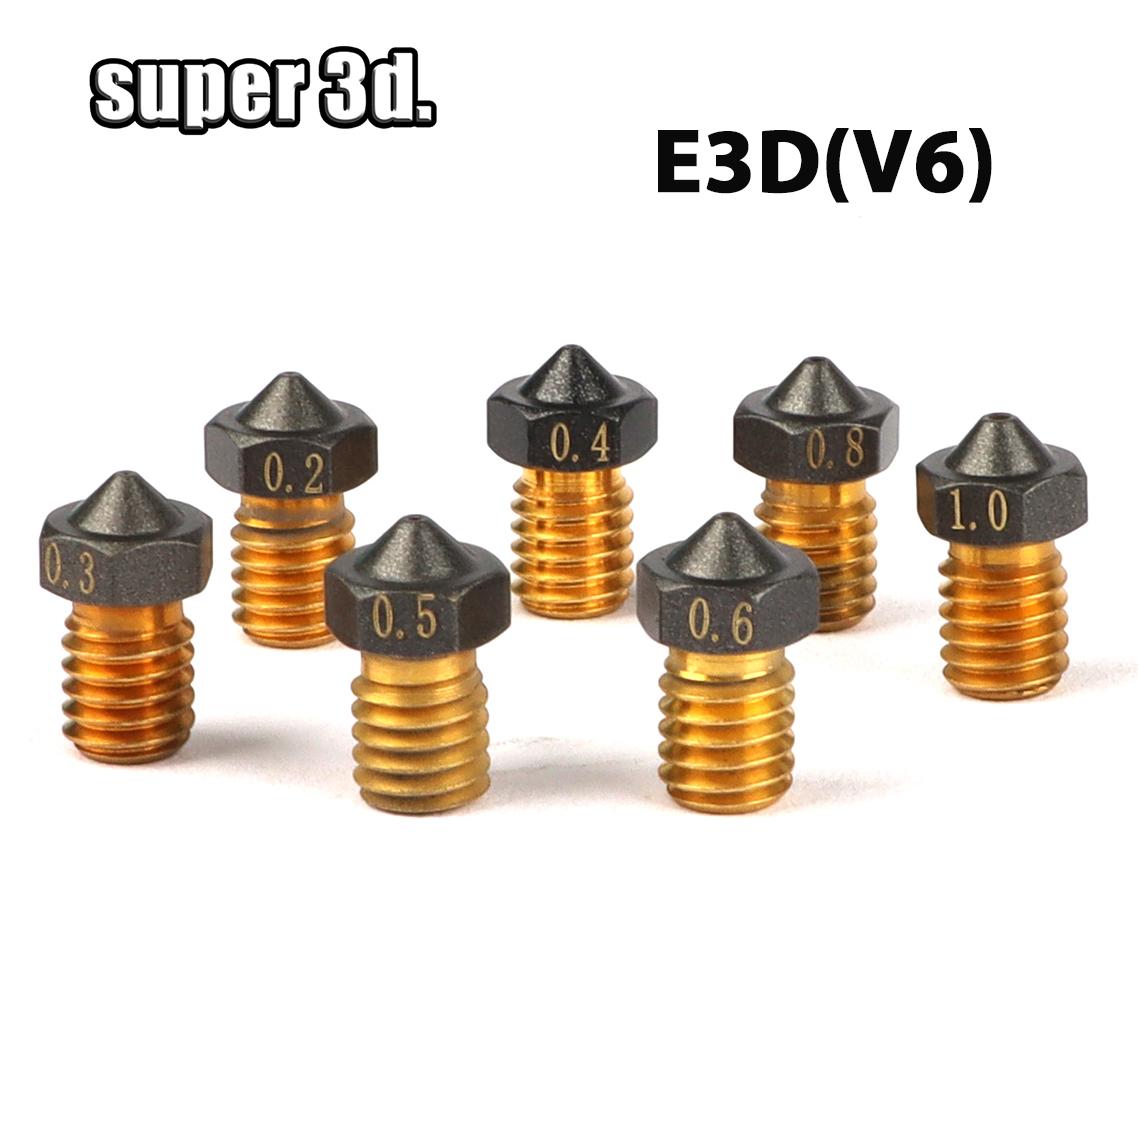 1/2/5PCS MK8/E3D/Volcano Brass PTFE NOZZE được tráng dây Non Stick 0,2/0,3/0,4/0,6/0,8/1,0mm Máy in 3D Ender 3 Envio GRATIS